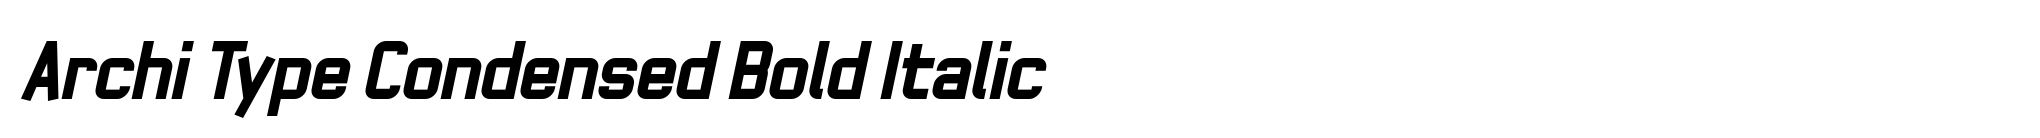 Archi Type Condensed Bold Italic image